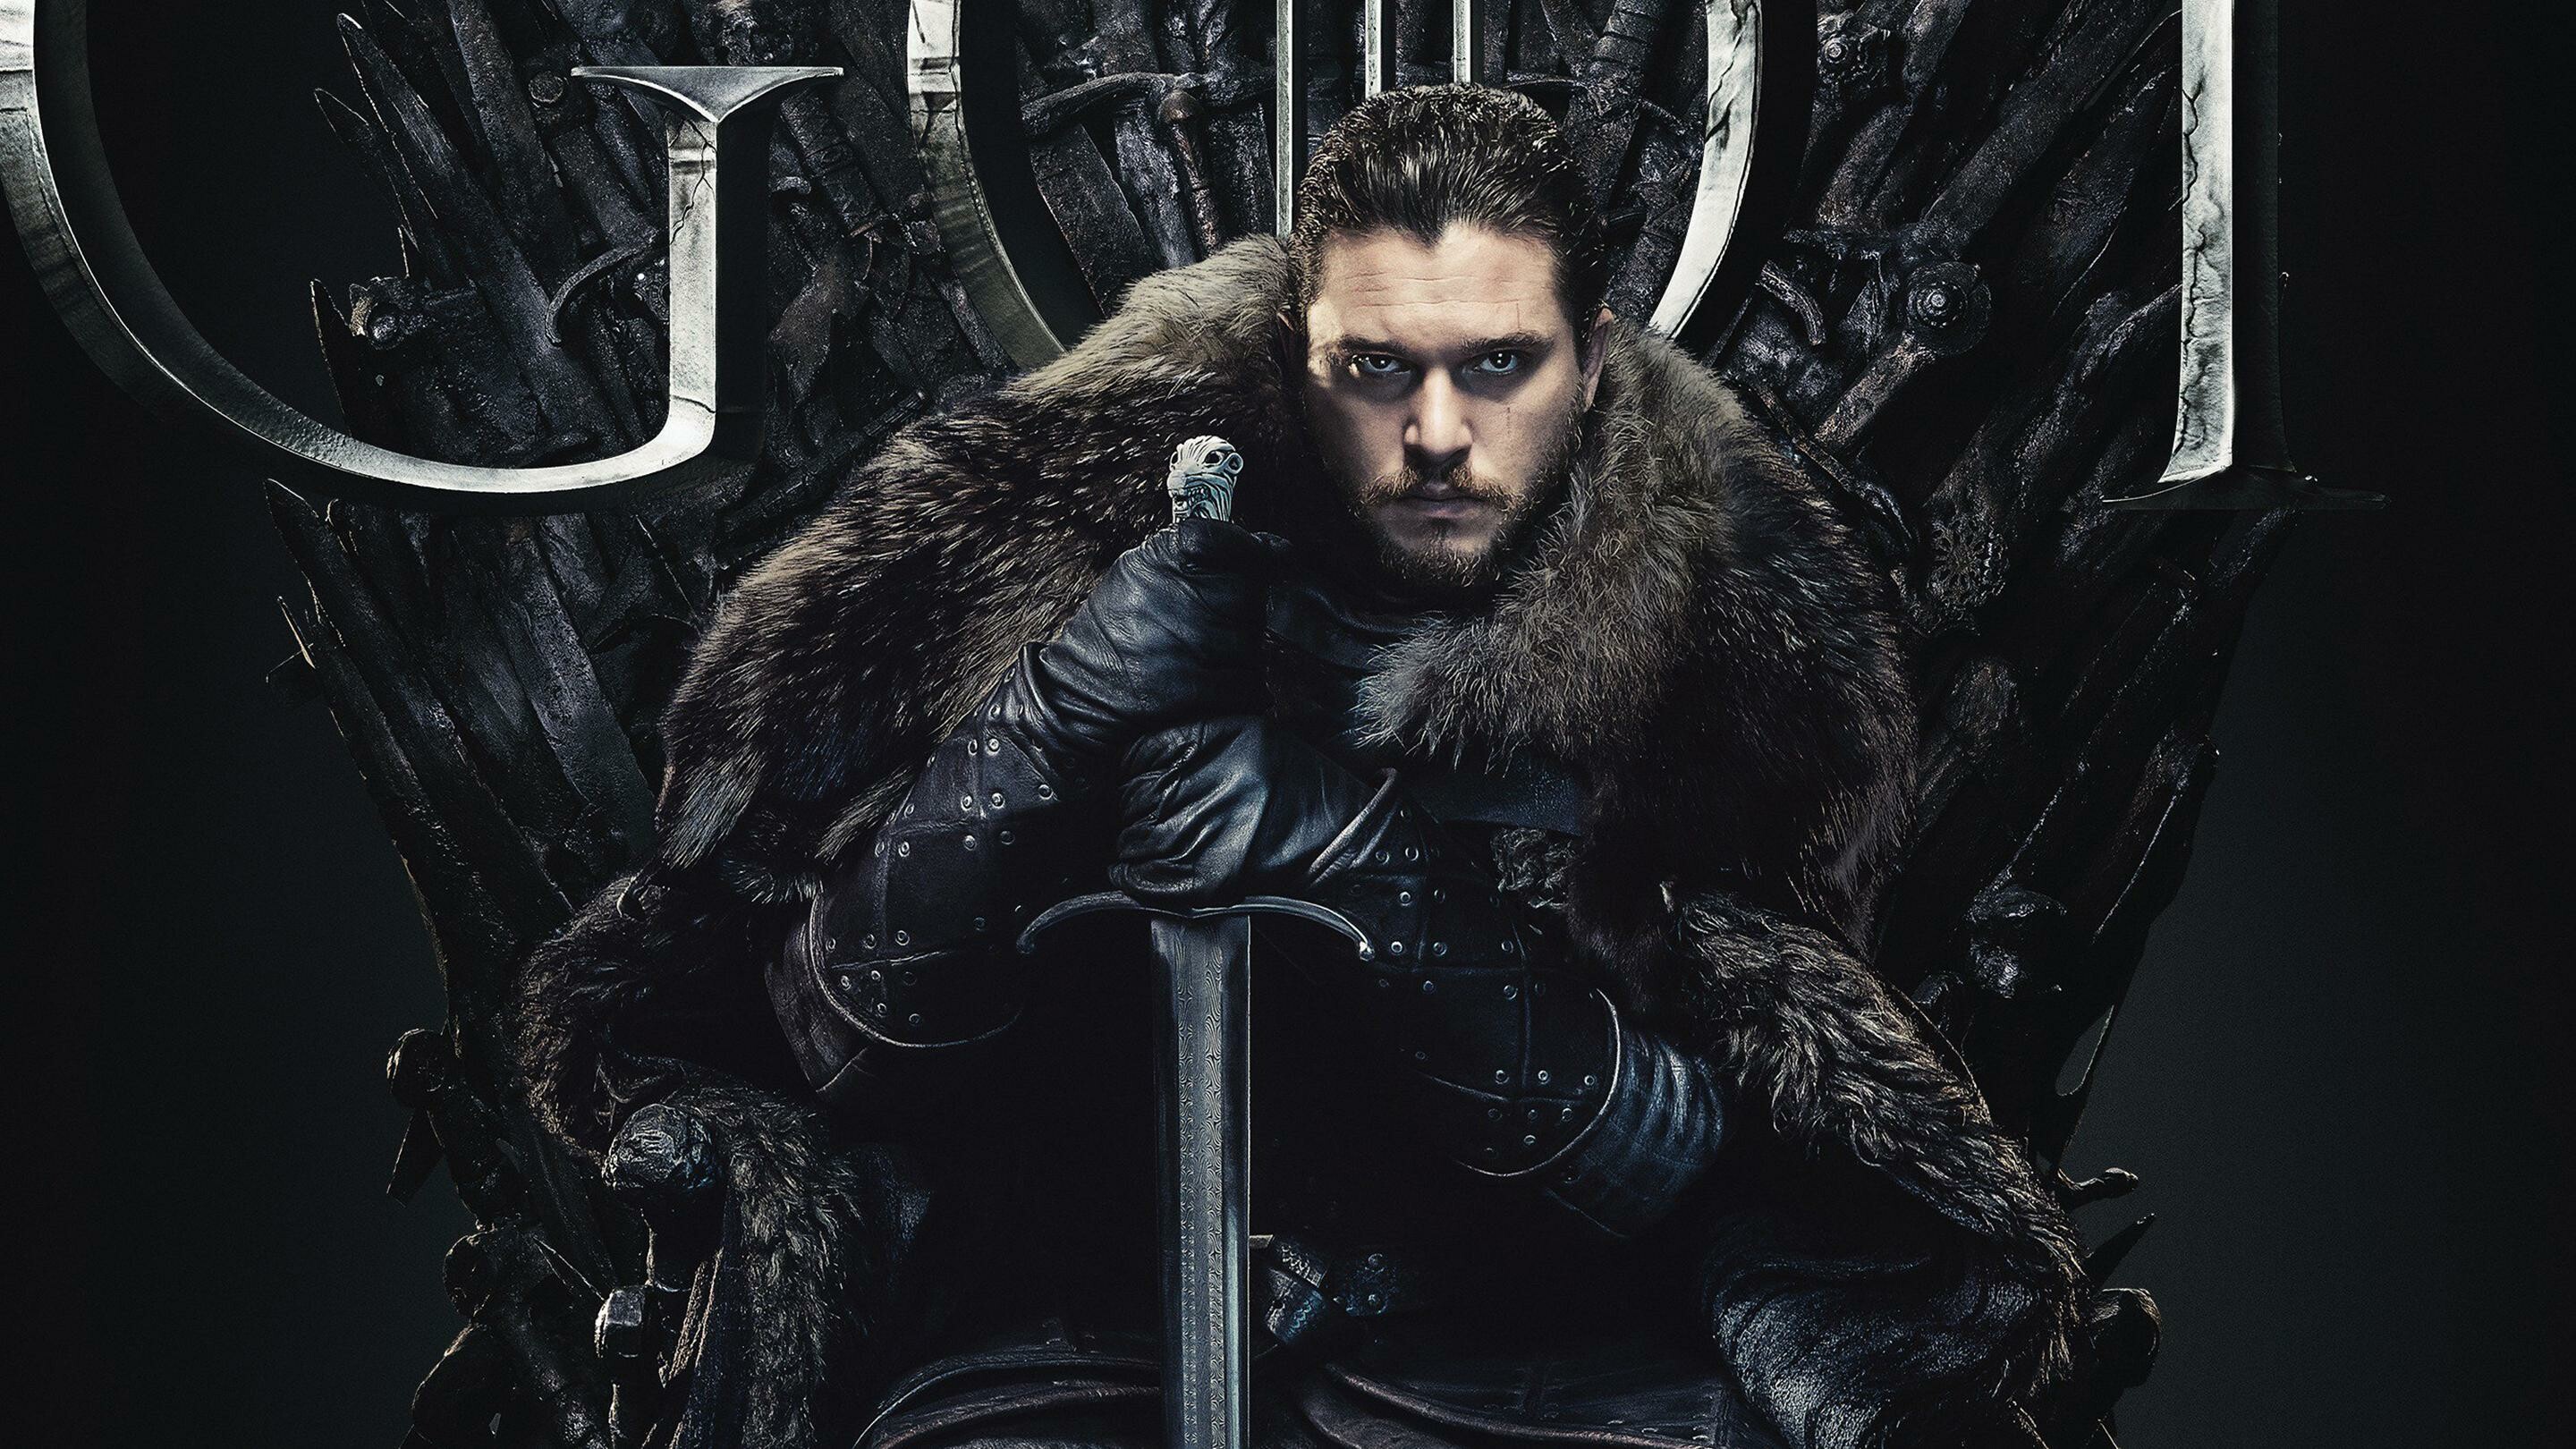 Game of Thrones: Season 8, Jon Snow, introduced as the illegitimate son of Ned Stark. 2880x1620 HD Wallpaper.